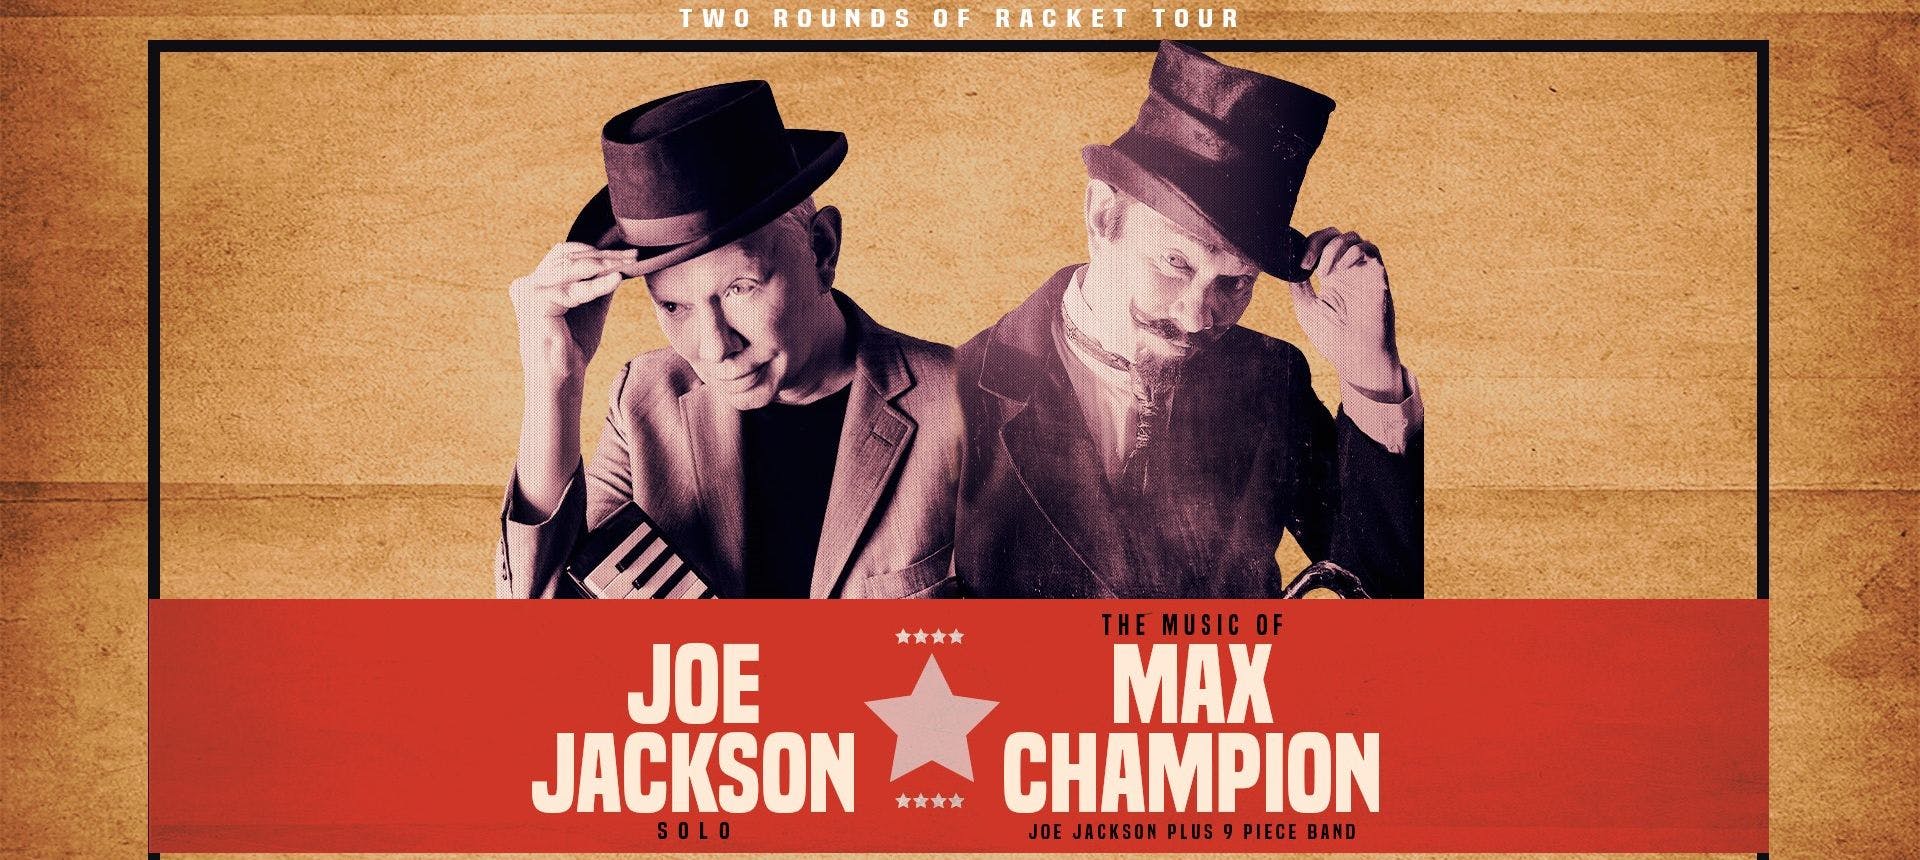 Joe Jackson - The Two Rounds Of Racket Tour